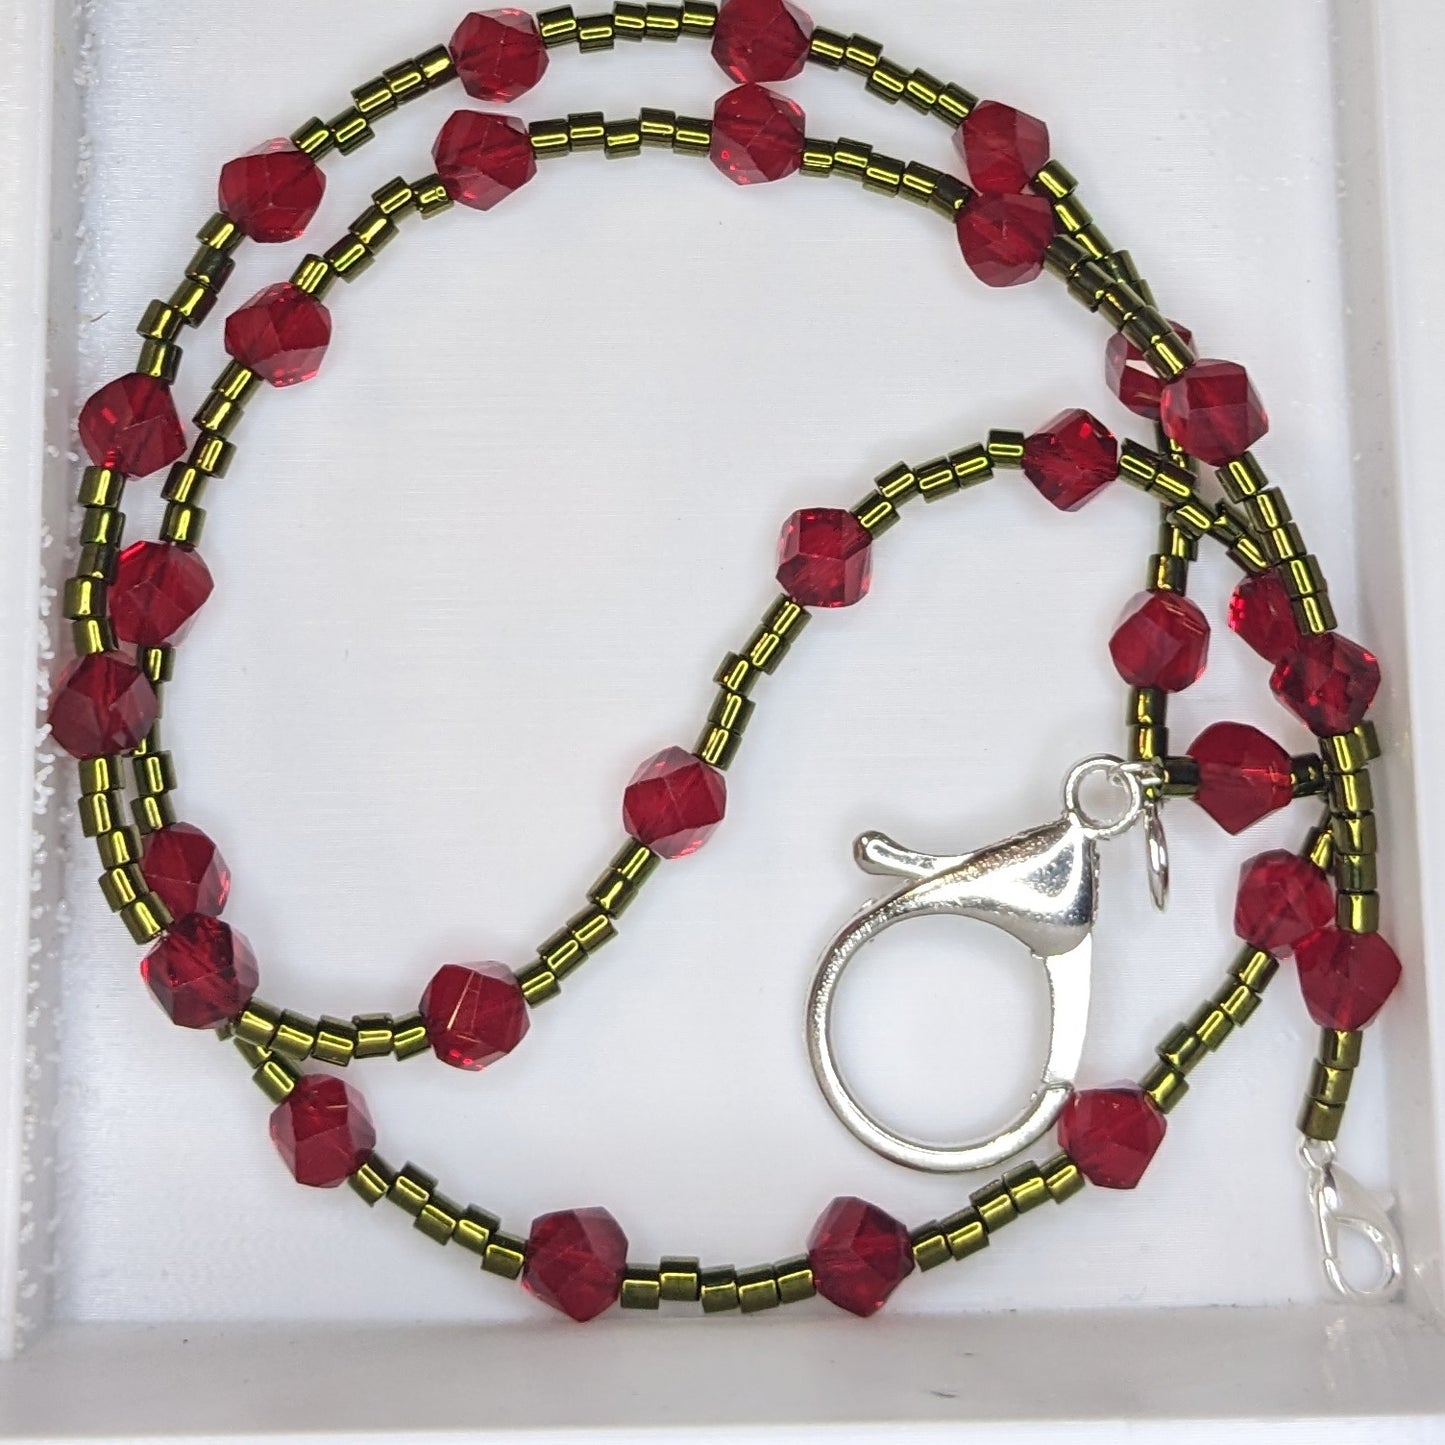 Stitch Marker Holder Necklaces